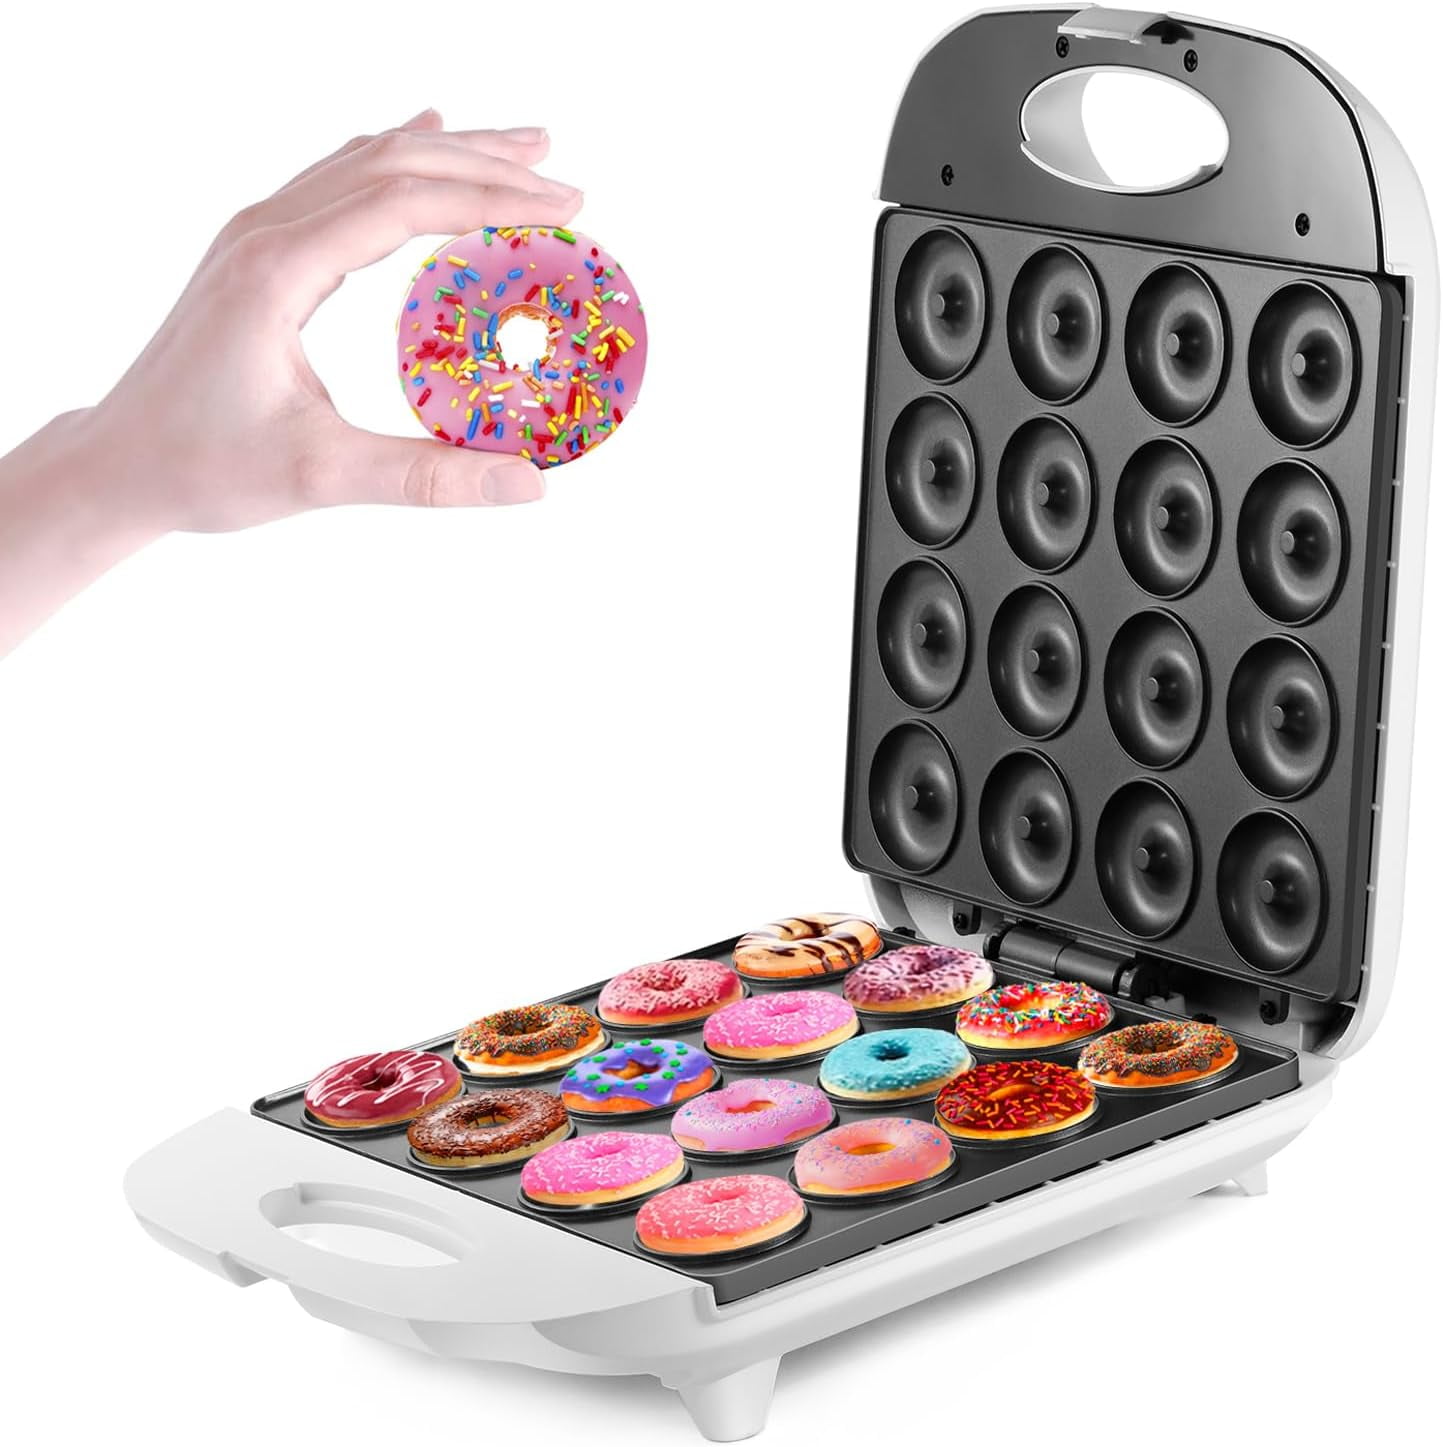 Dash Express Mini Donut Maker